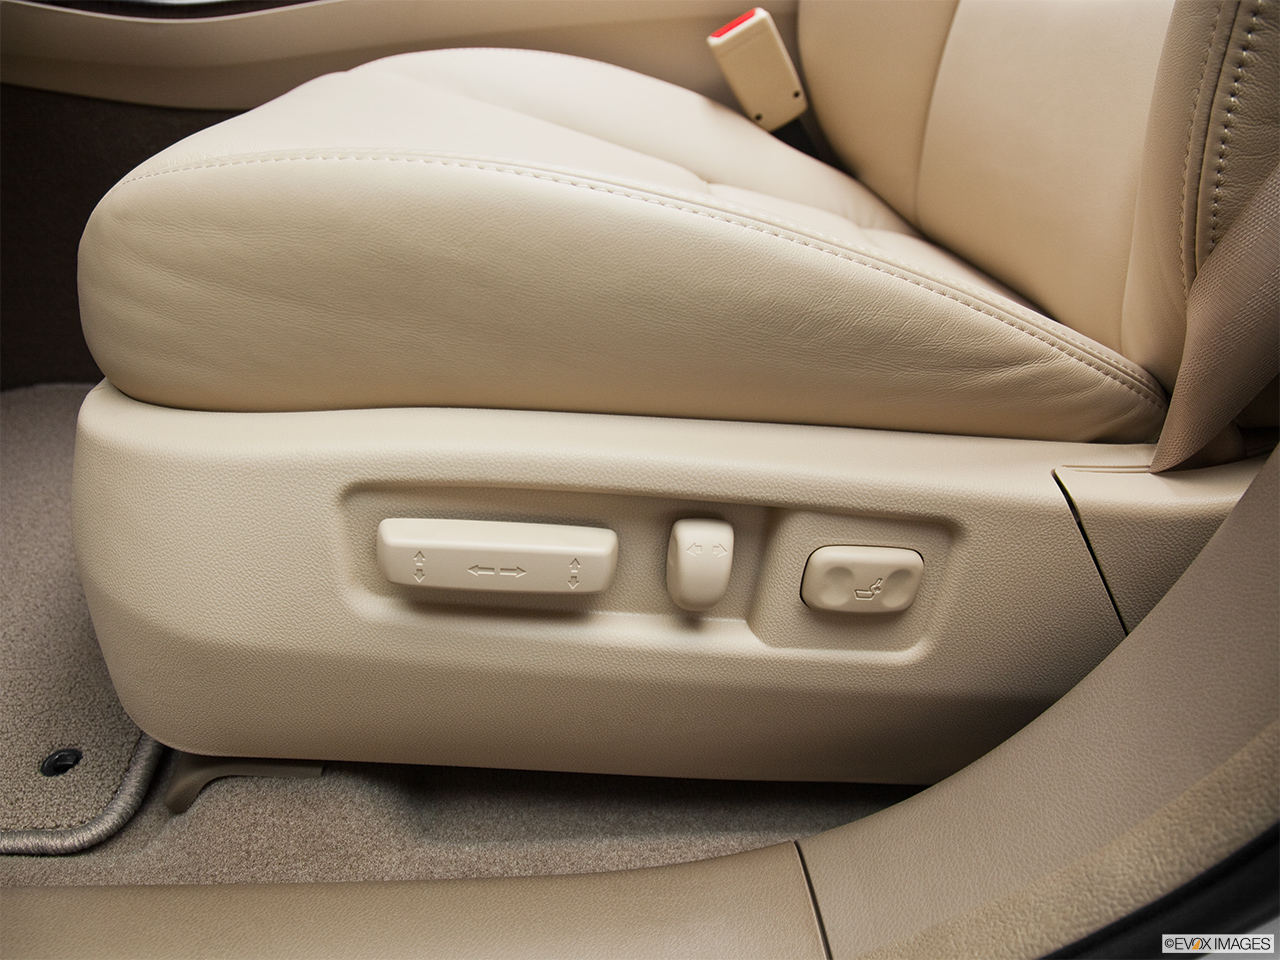 2012 Acura MDX MDX Seat Adjustment Controllers. 